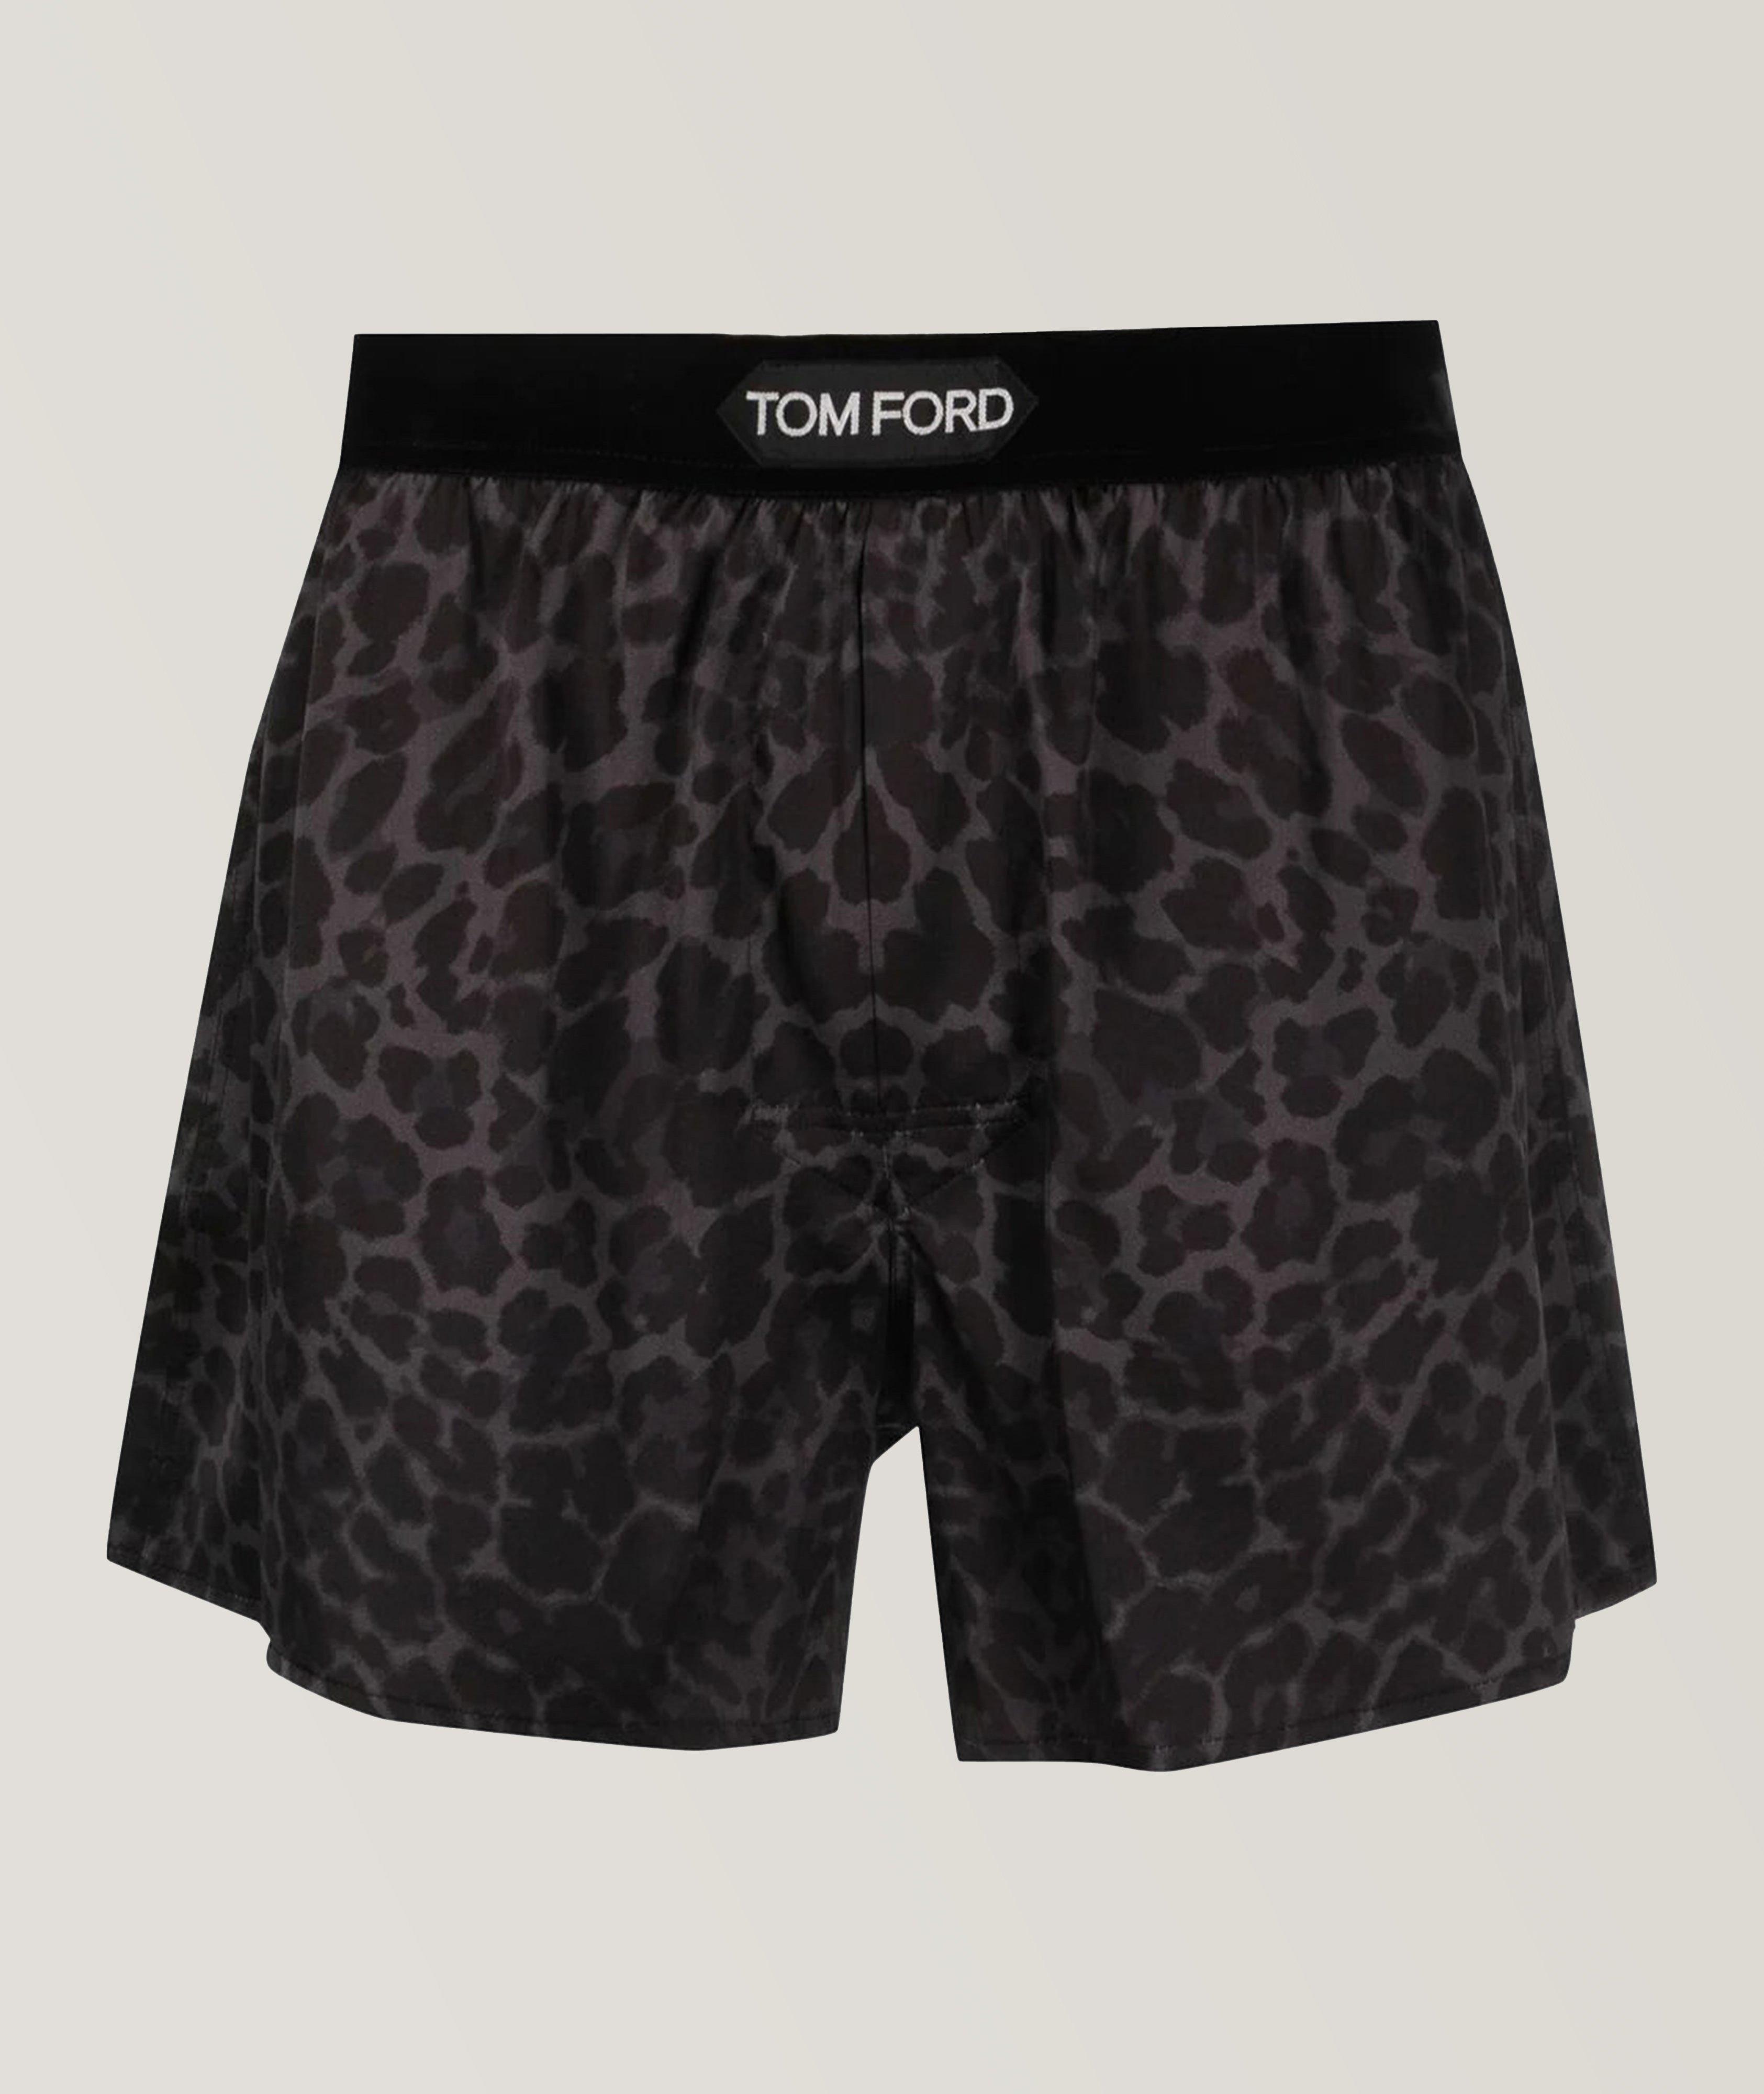 TOM FORD Leopard Printed Silk Boxers, Underwear